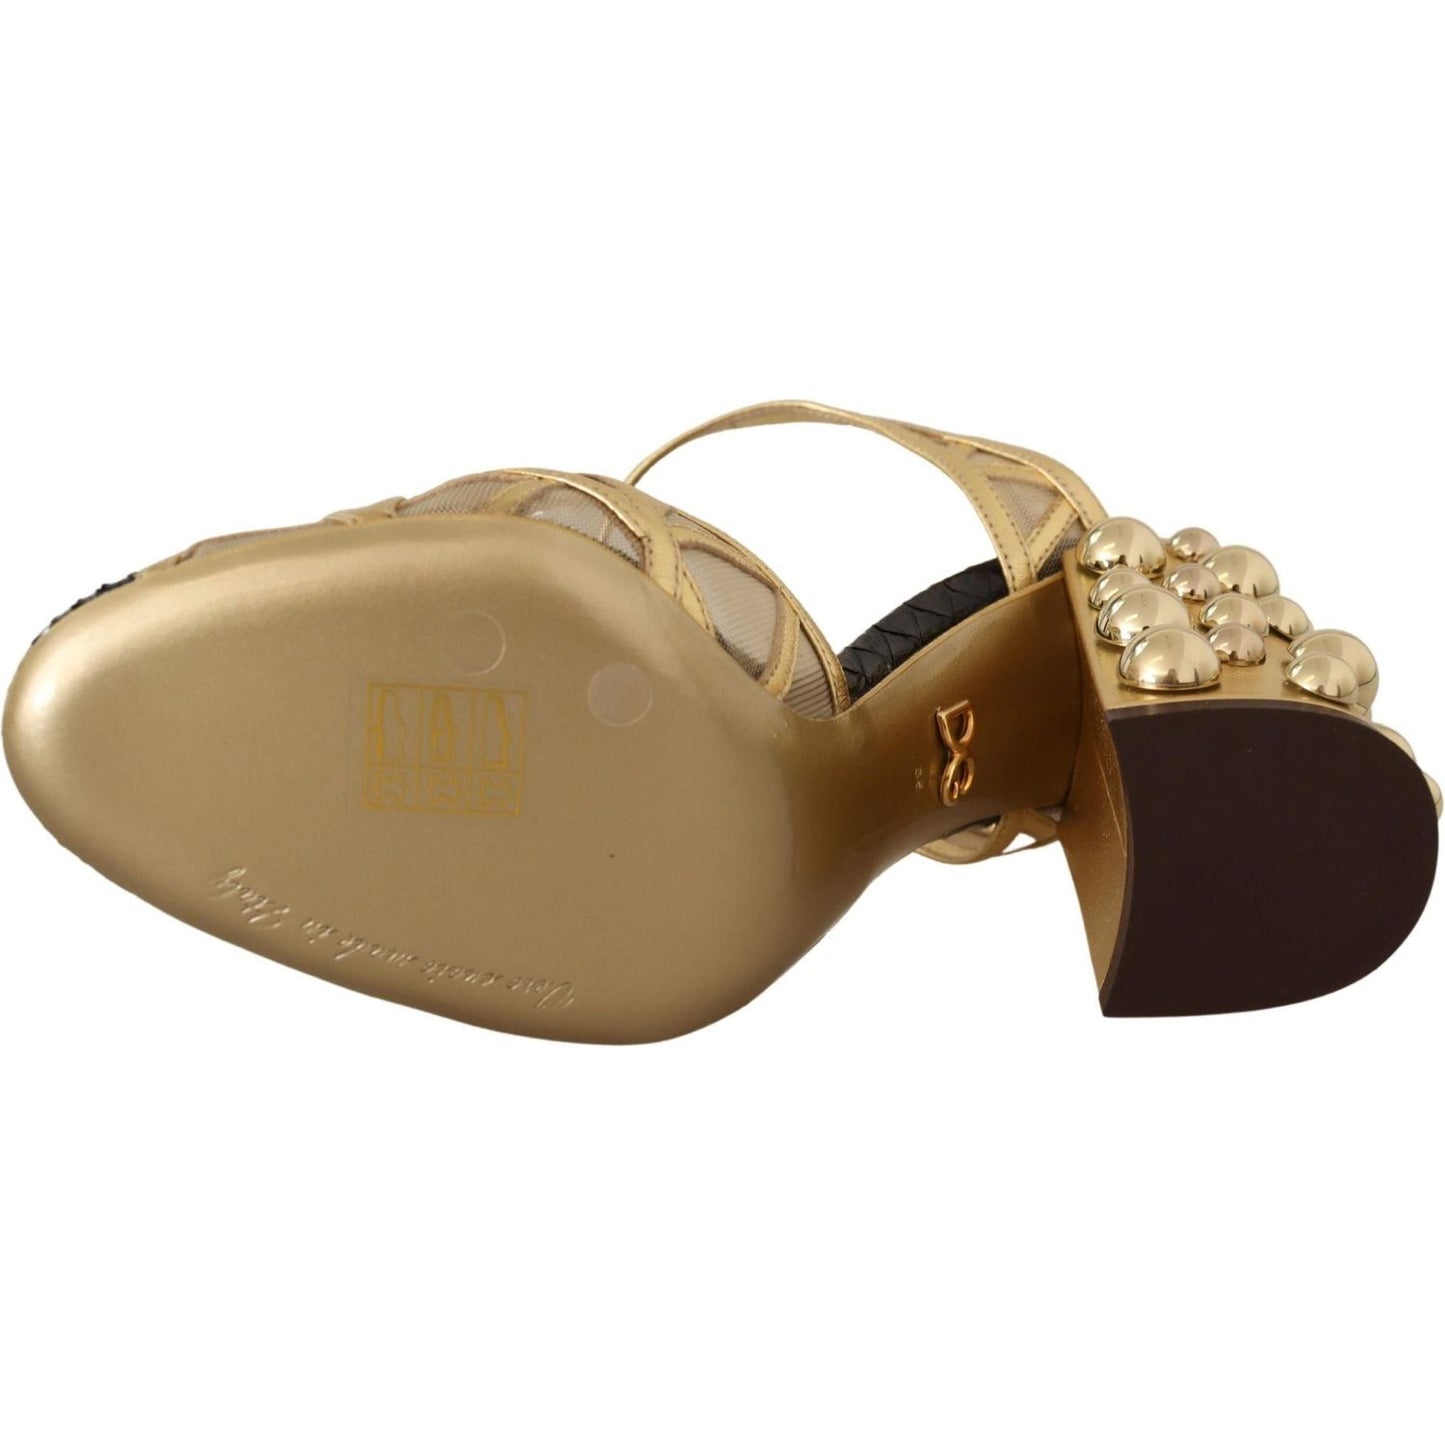 Dolce & Gabbana Elegant Crystal Studded Leather Pumps black-gold-leather-studded-ankle-straps-shoes IMG_5837-scaled-245ff538-c4f.jpg